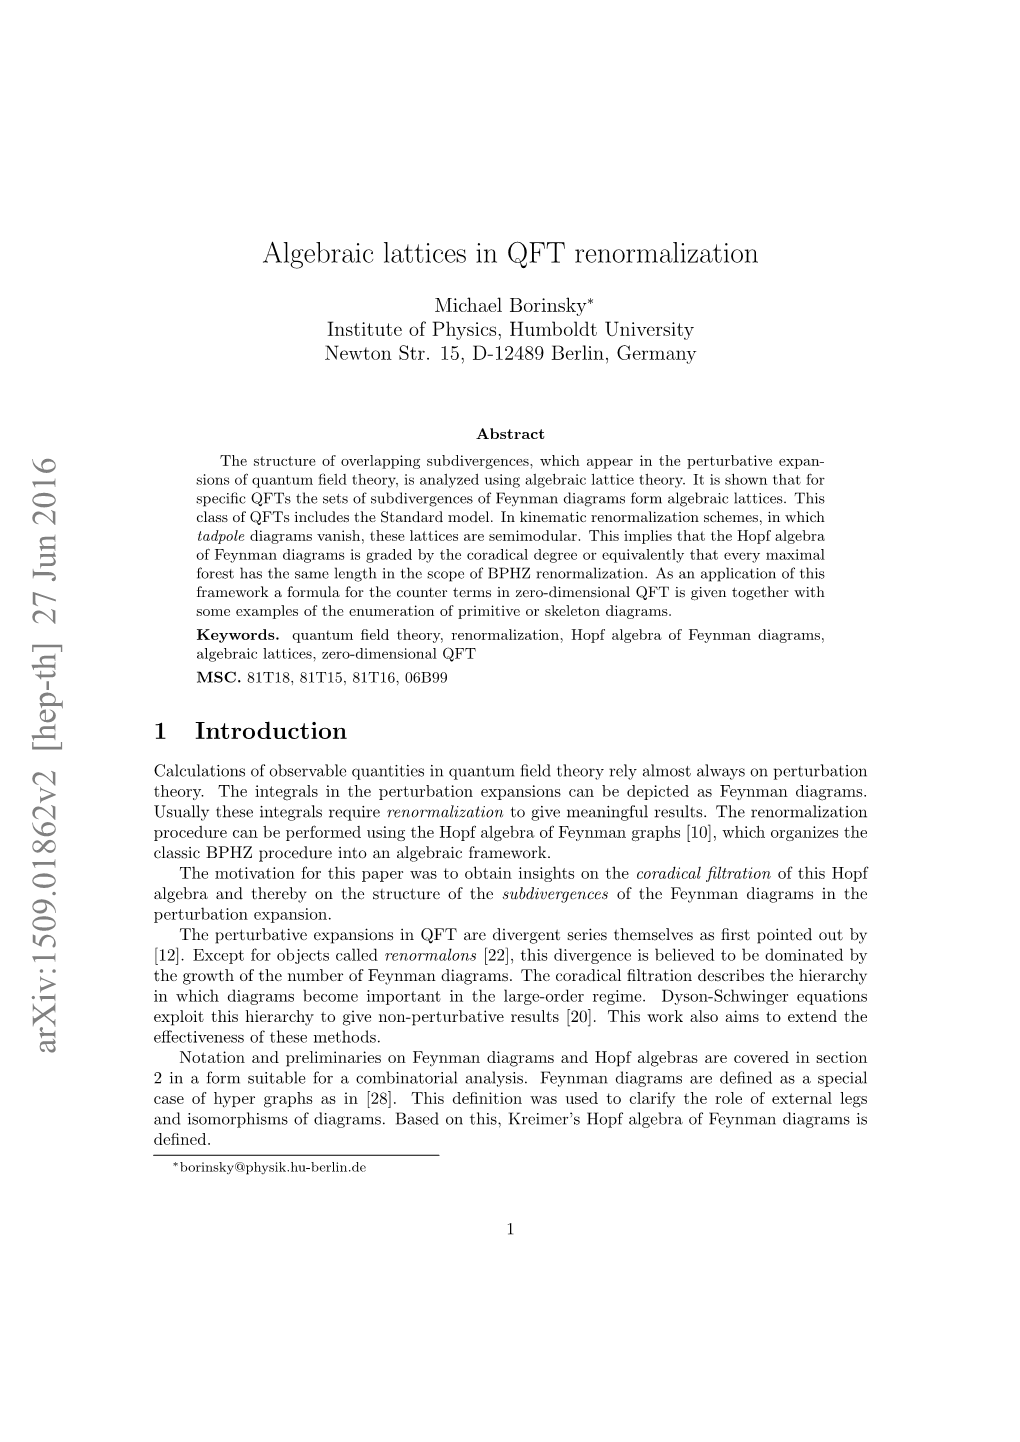 Algebraic Lattices in QFT Renormalization